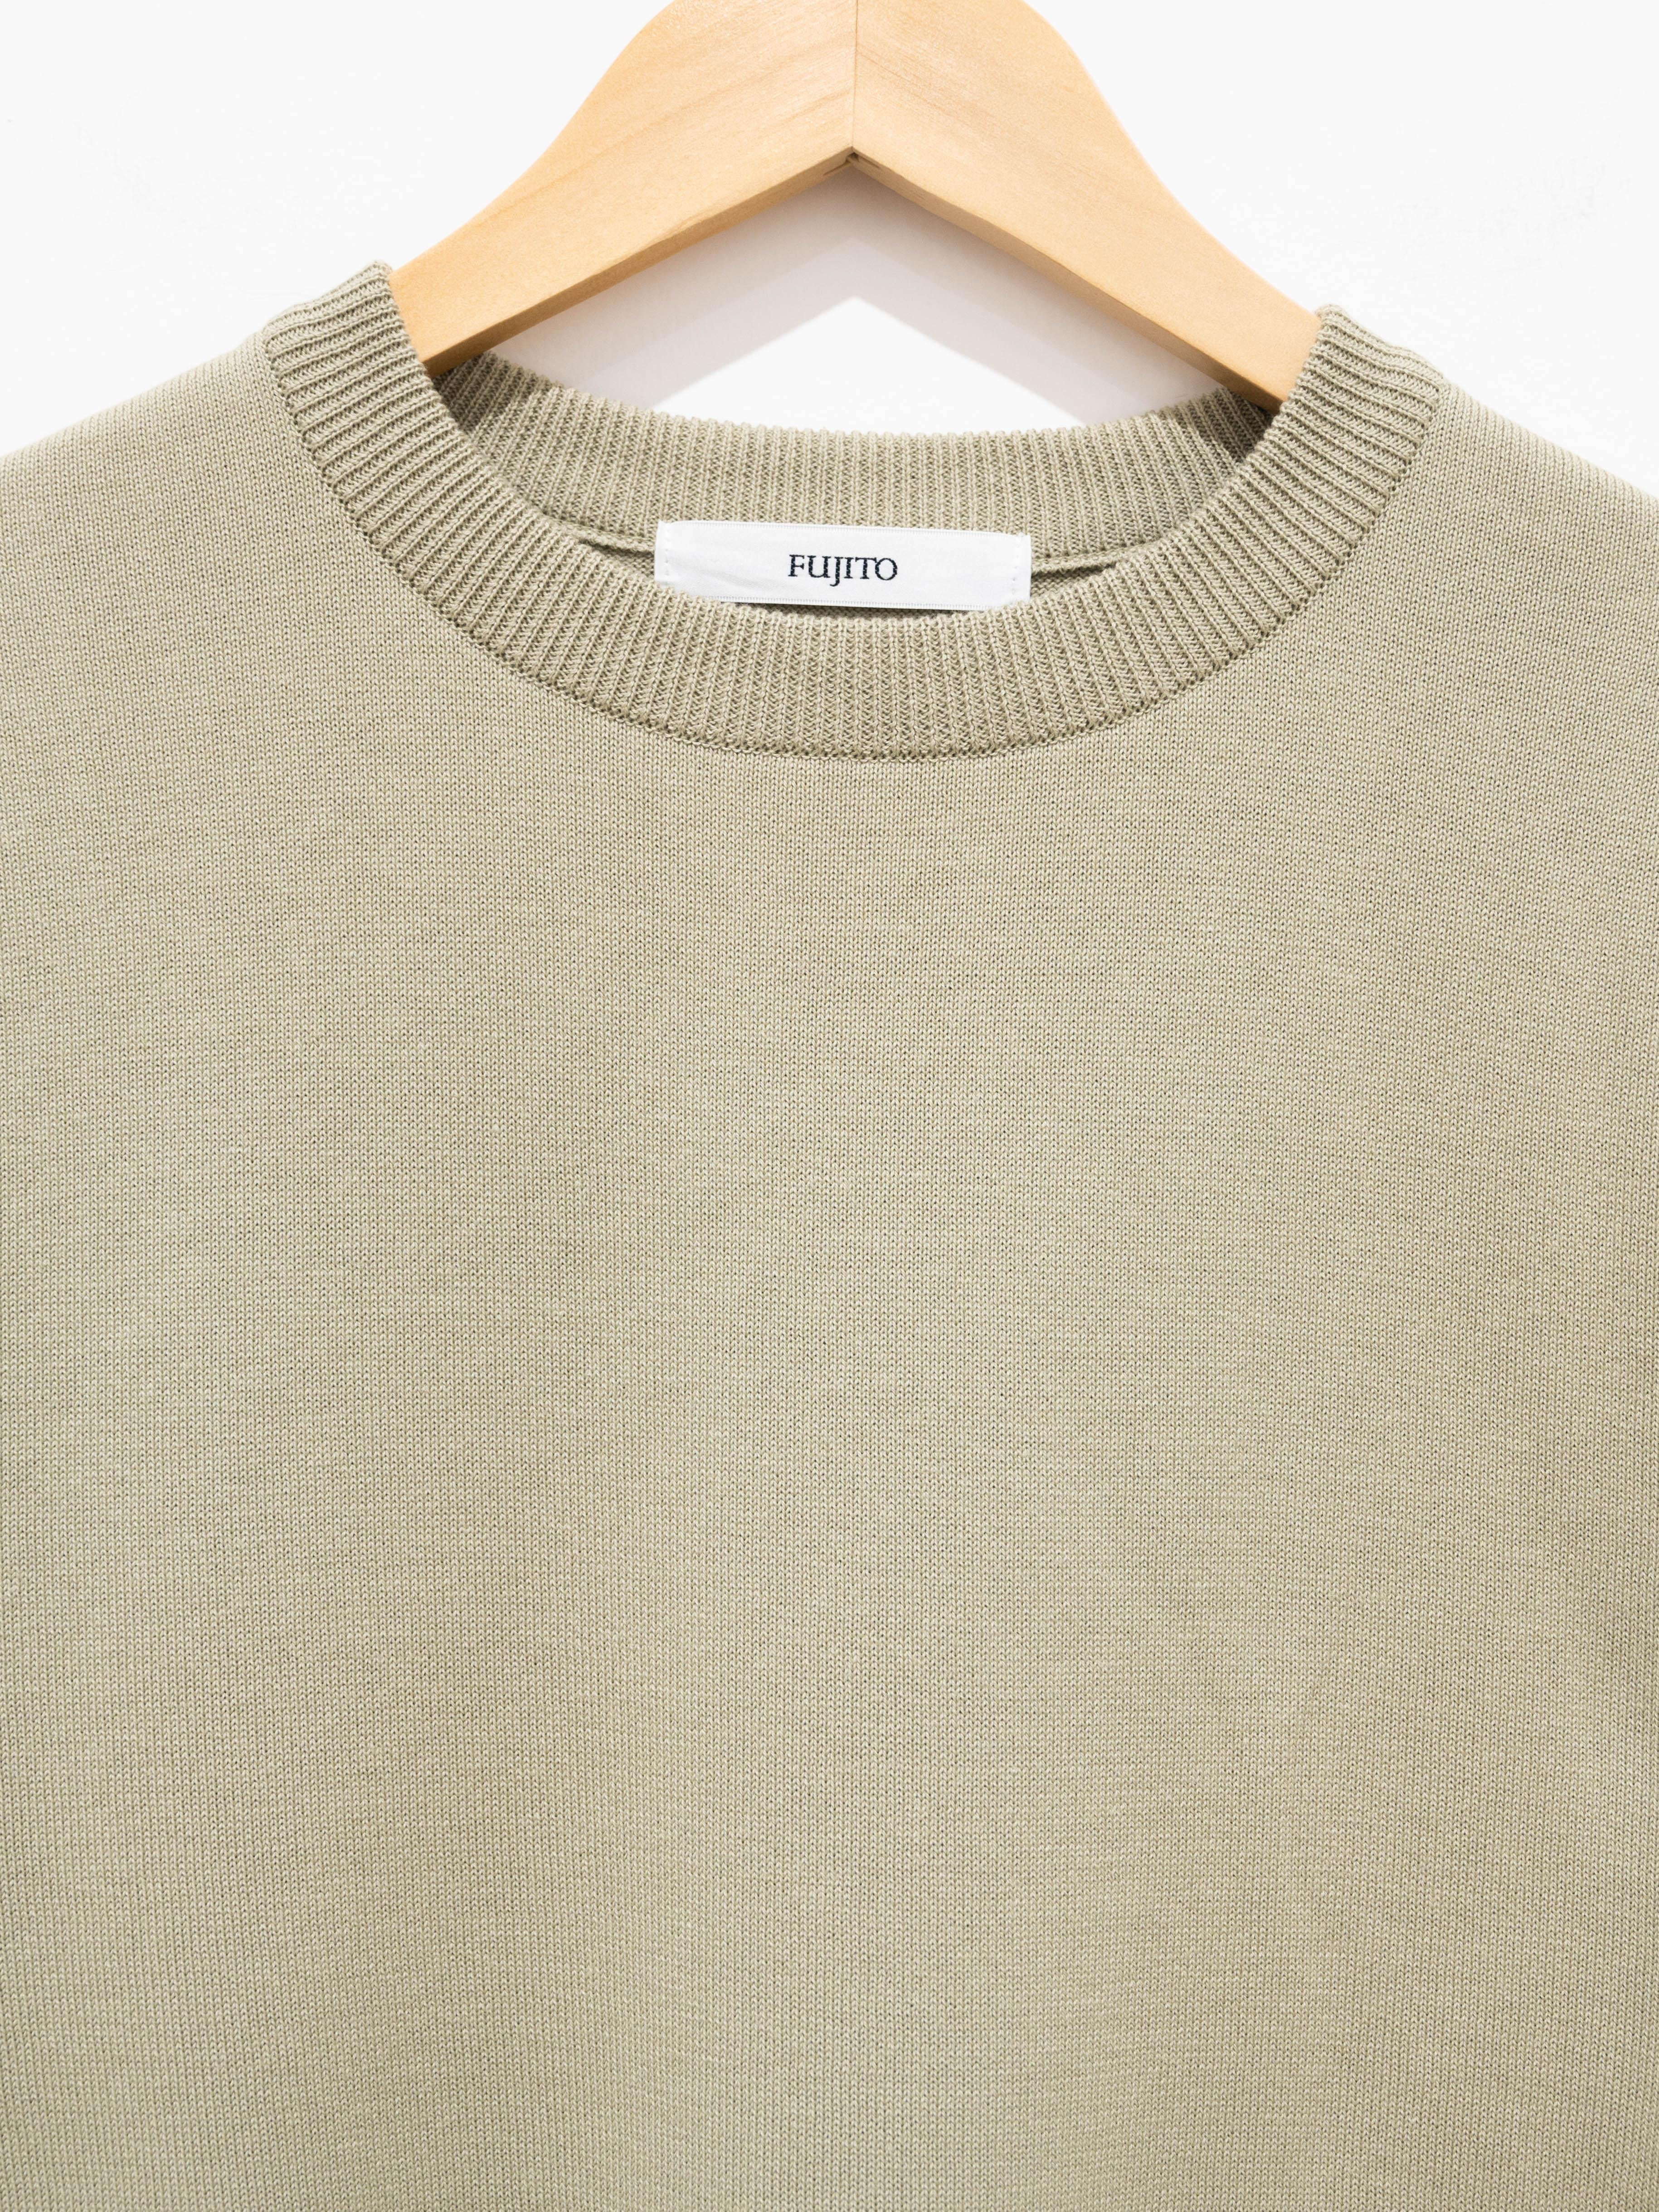 Namu Shop - Fujito C/N Knit T-Shirt - Wasabi Green